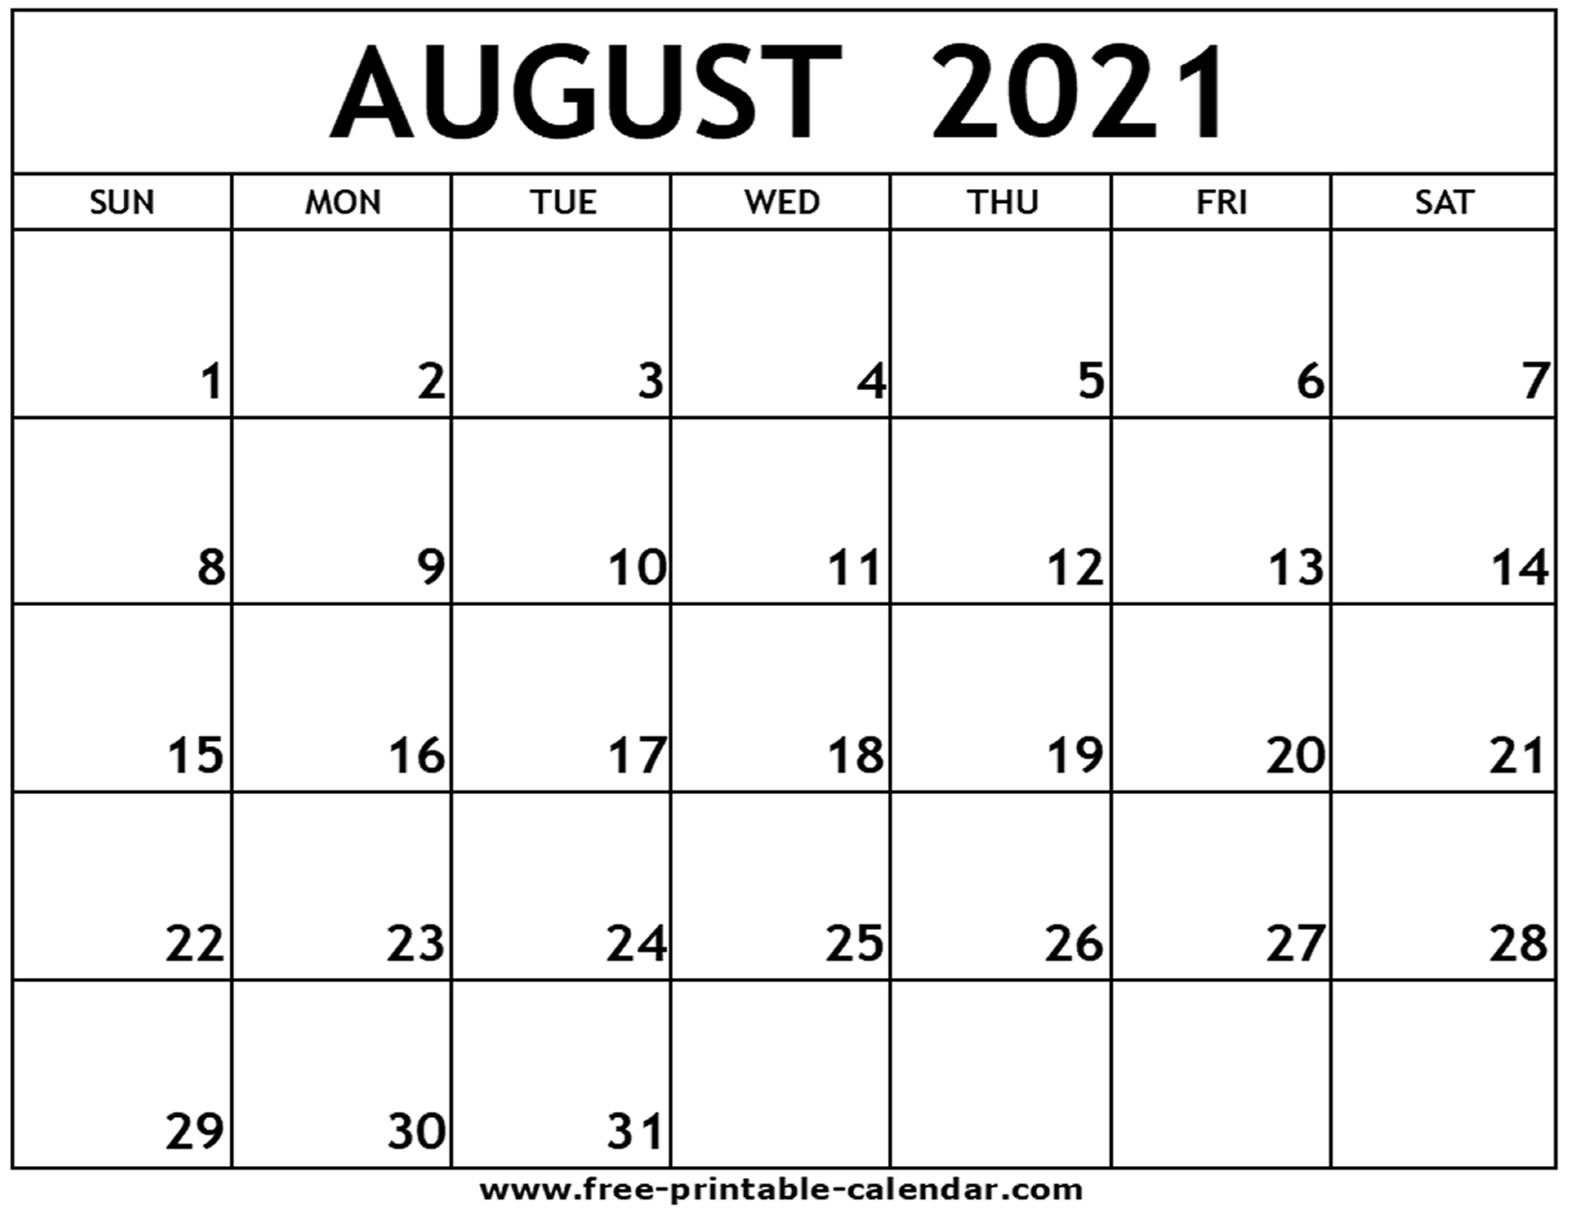 Collect August 2021 Calendar Printable